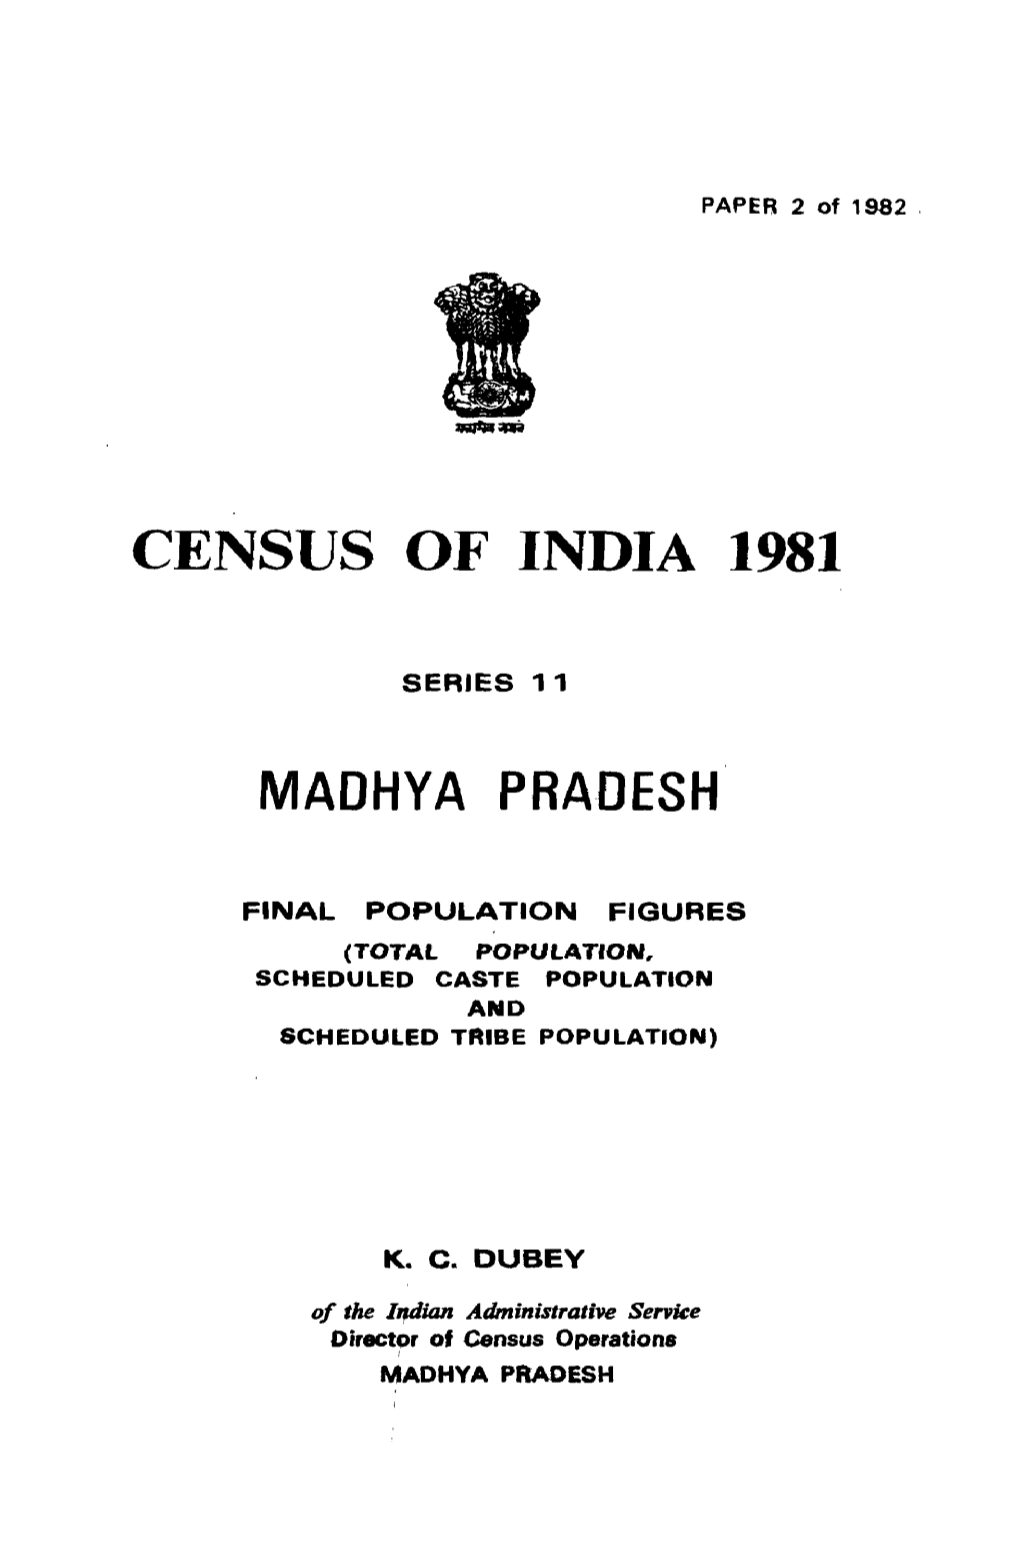 Final Population Figures, Series-11